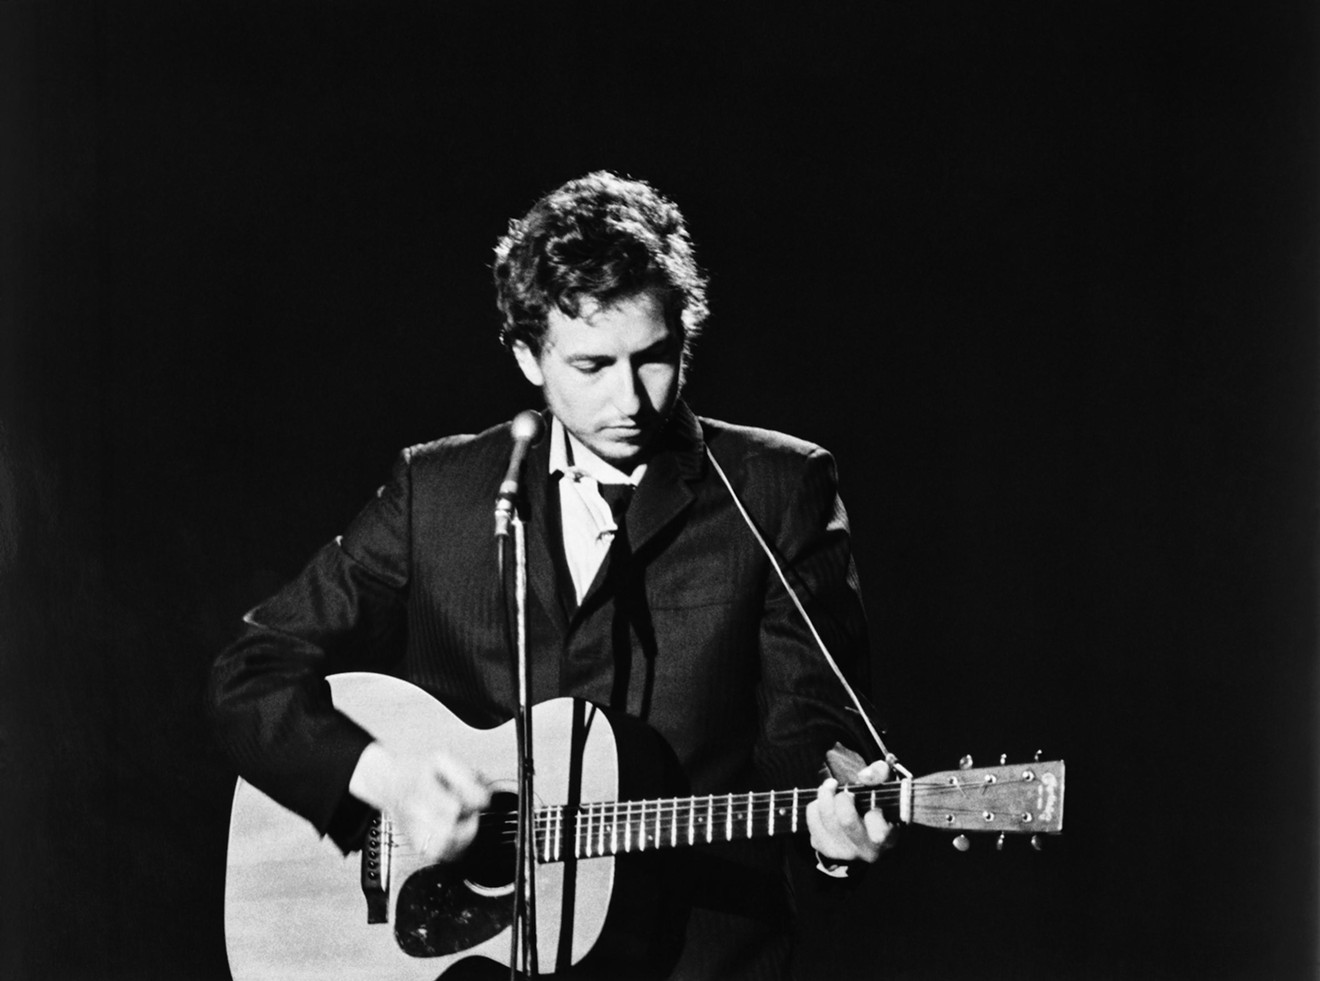 Bob Dylan on The Johnny Cash Show at Ryman Auditorium in Nashville on June 7, 1969.